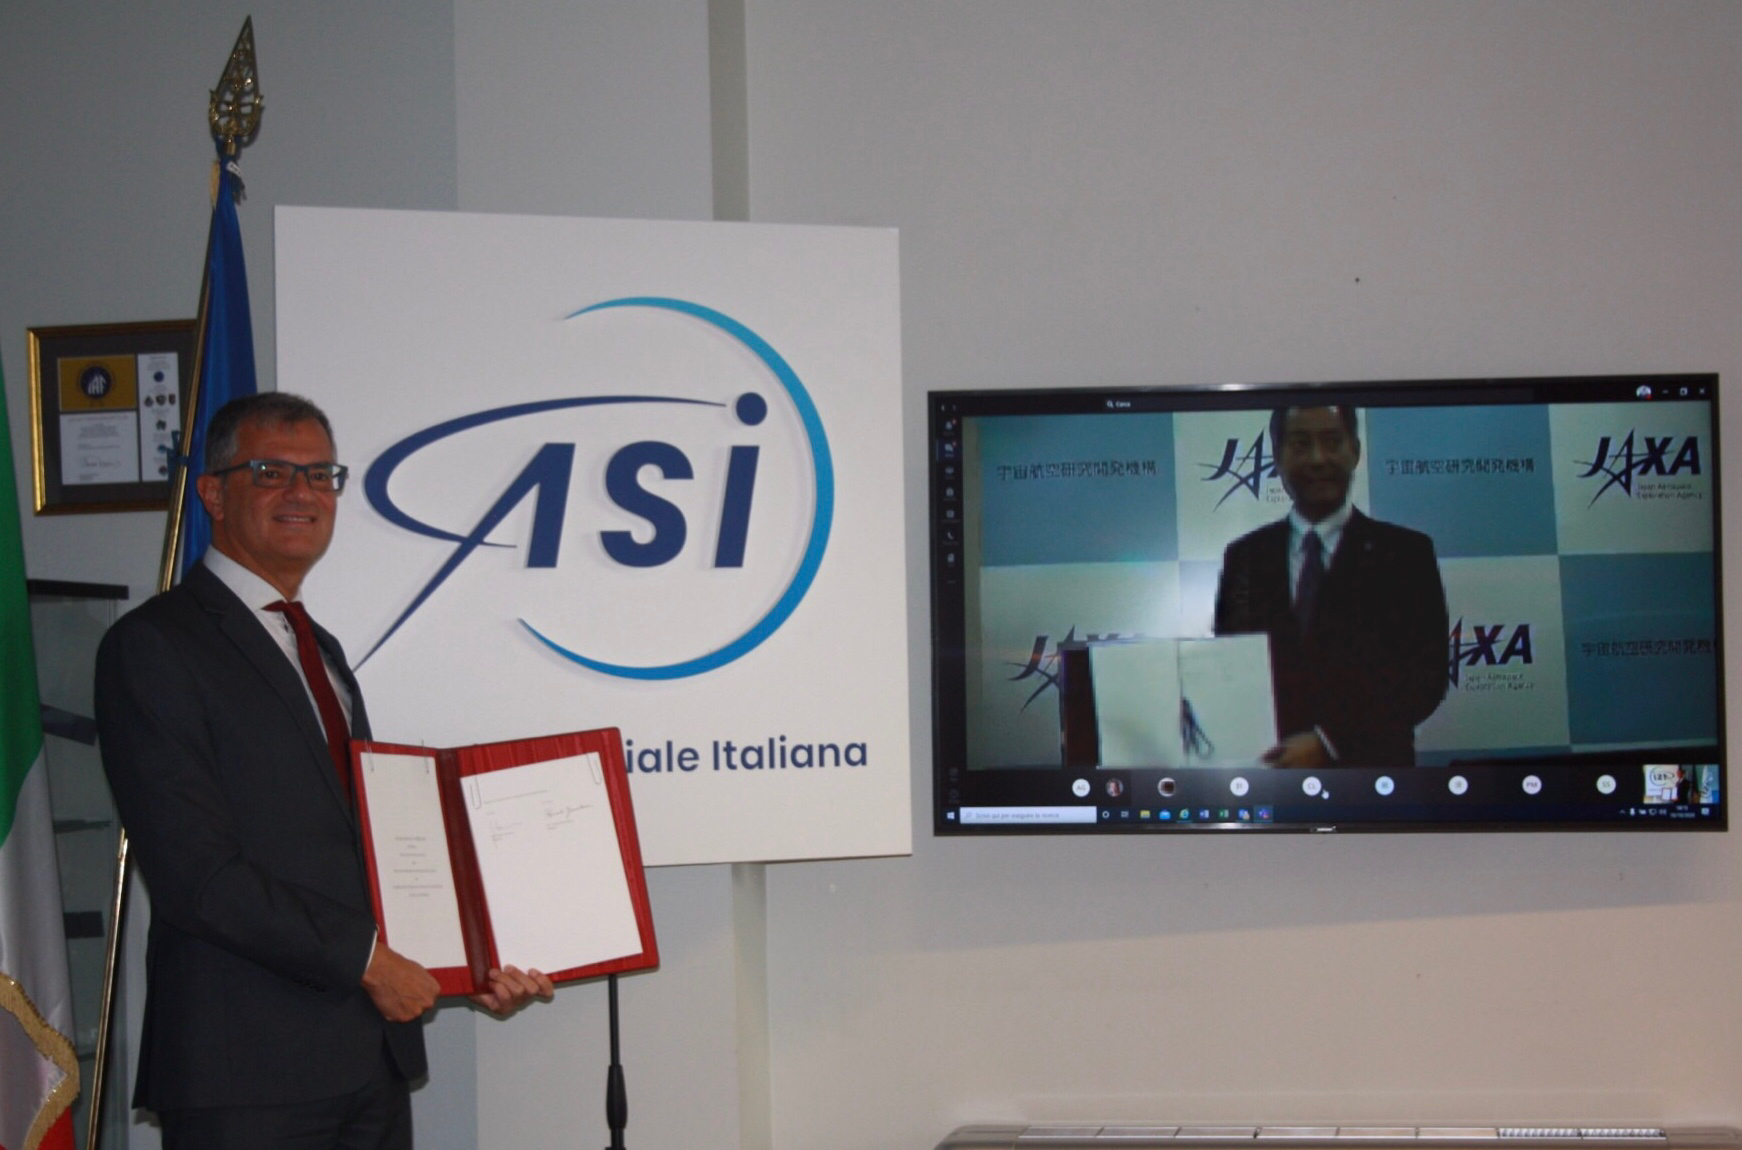 ASI and JAXA sign the Memorandum of Cooperation